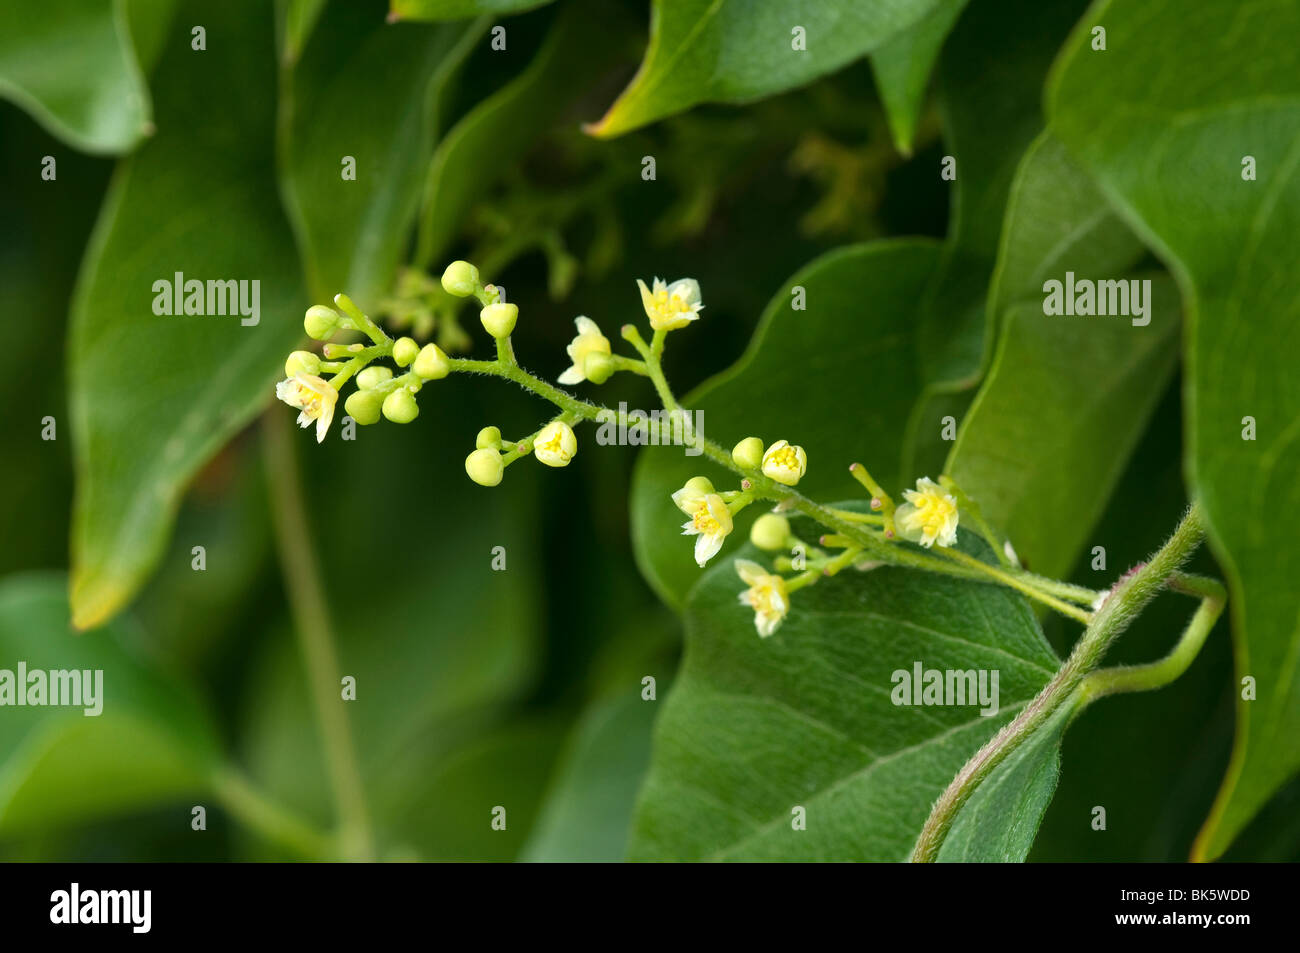 Korean Moonseed (Cocculus trilobus), flowering twig. Stock Photo